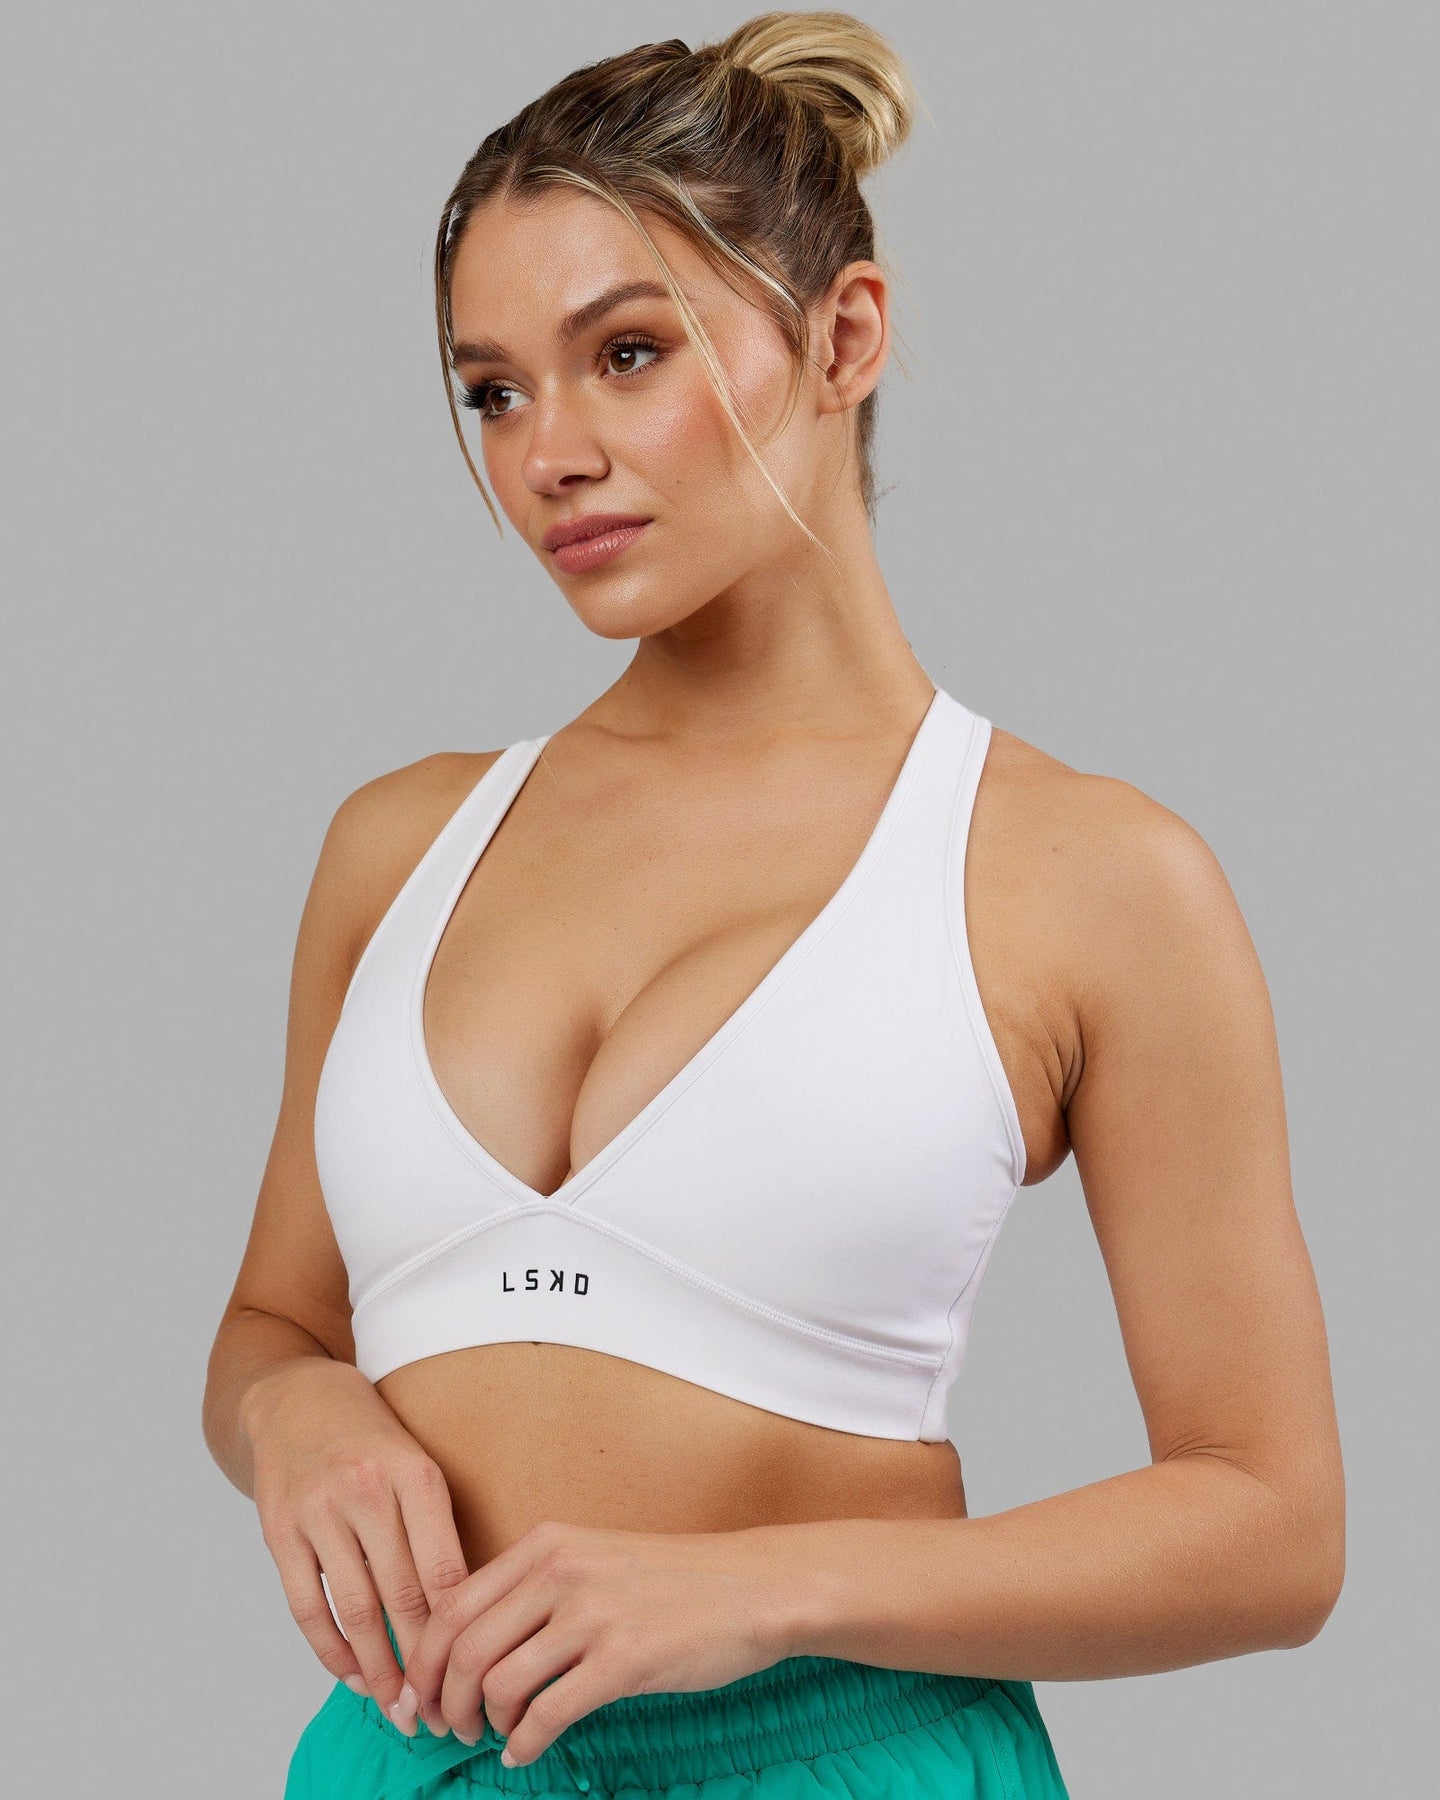 LSKD - NEW IN // STAMINA SPORTS BRA Our latest medium sports bra